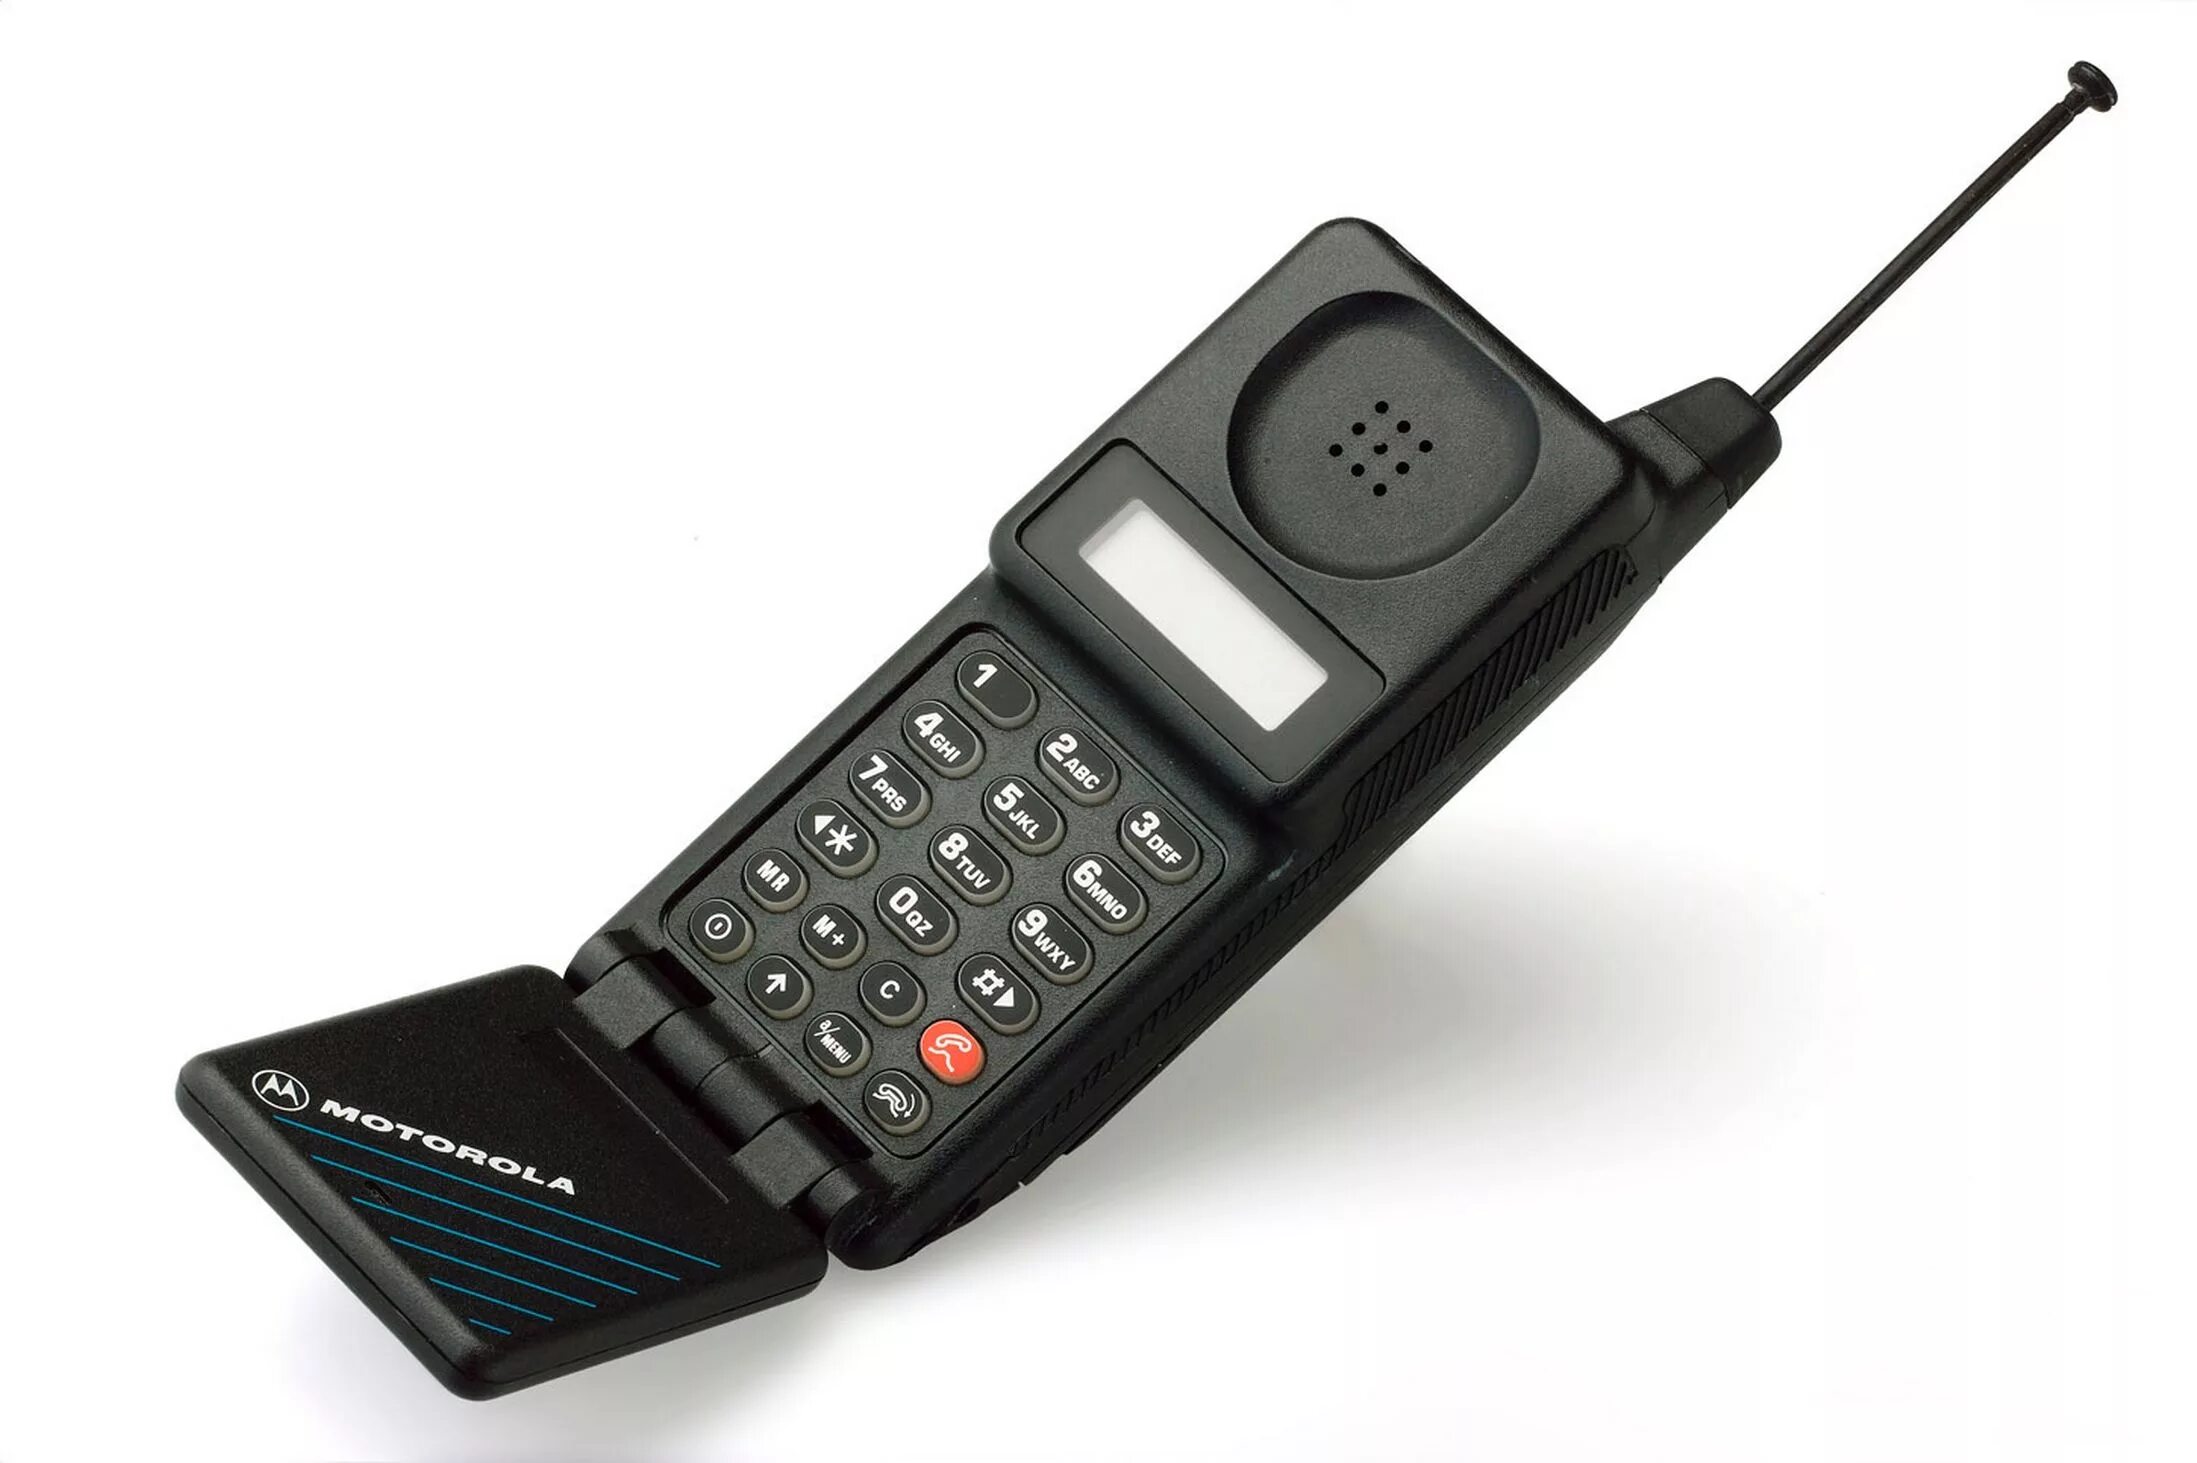 Motorola MICROTAC 9800x. Моторола микротак 9800. Motorola MICROTAC Classic. Motorola 1989.